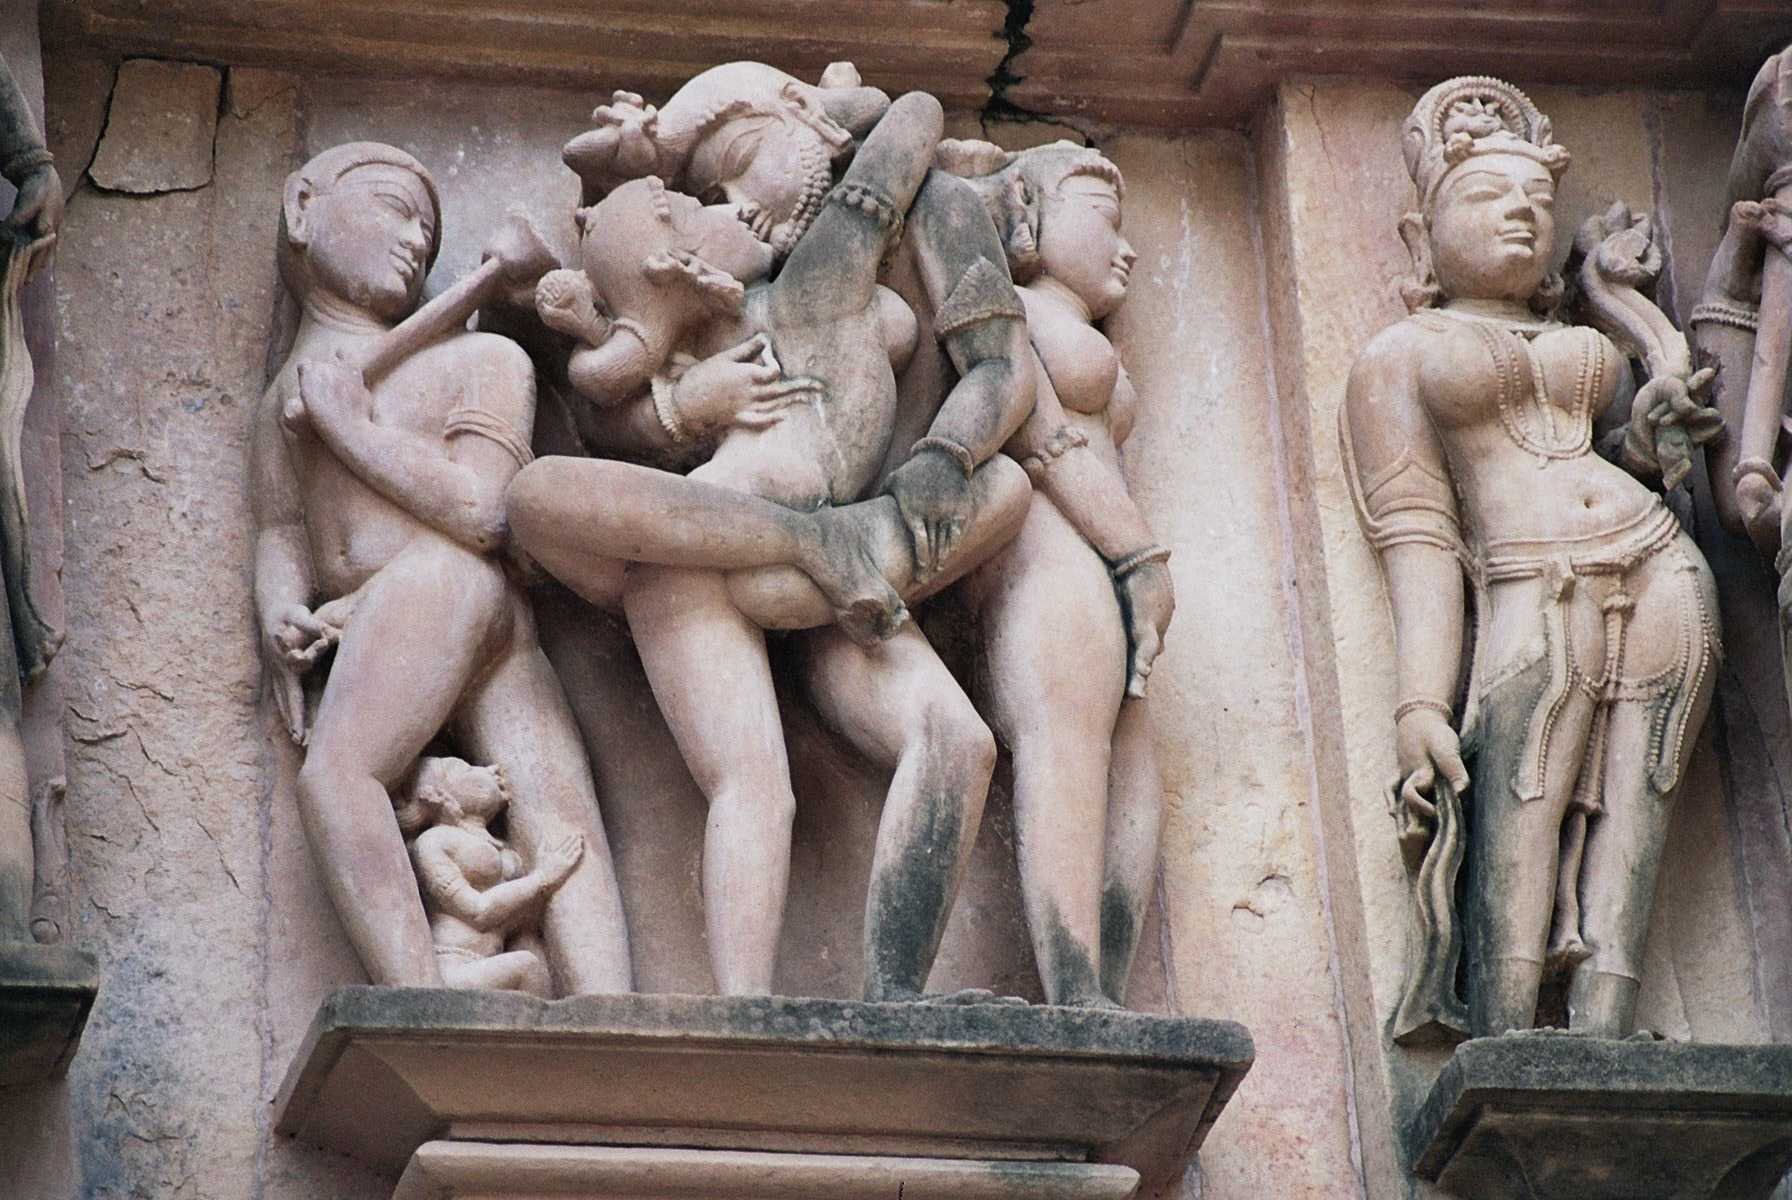 Porn of antiquity from Khajuraho, India